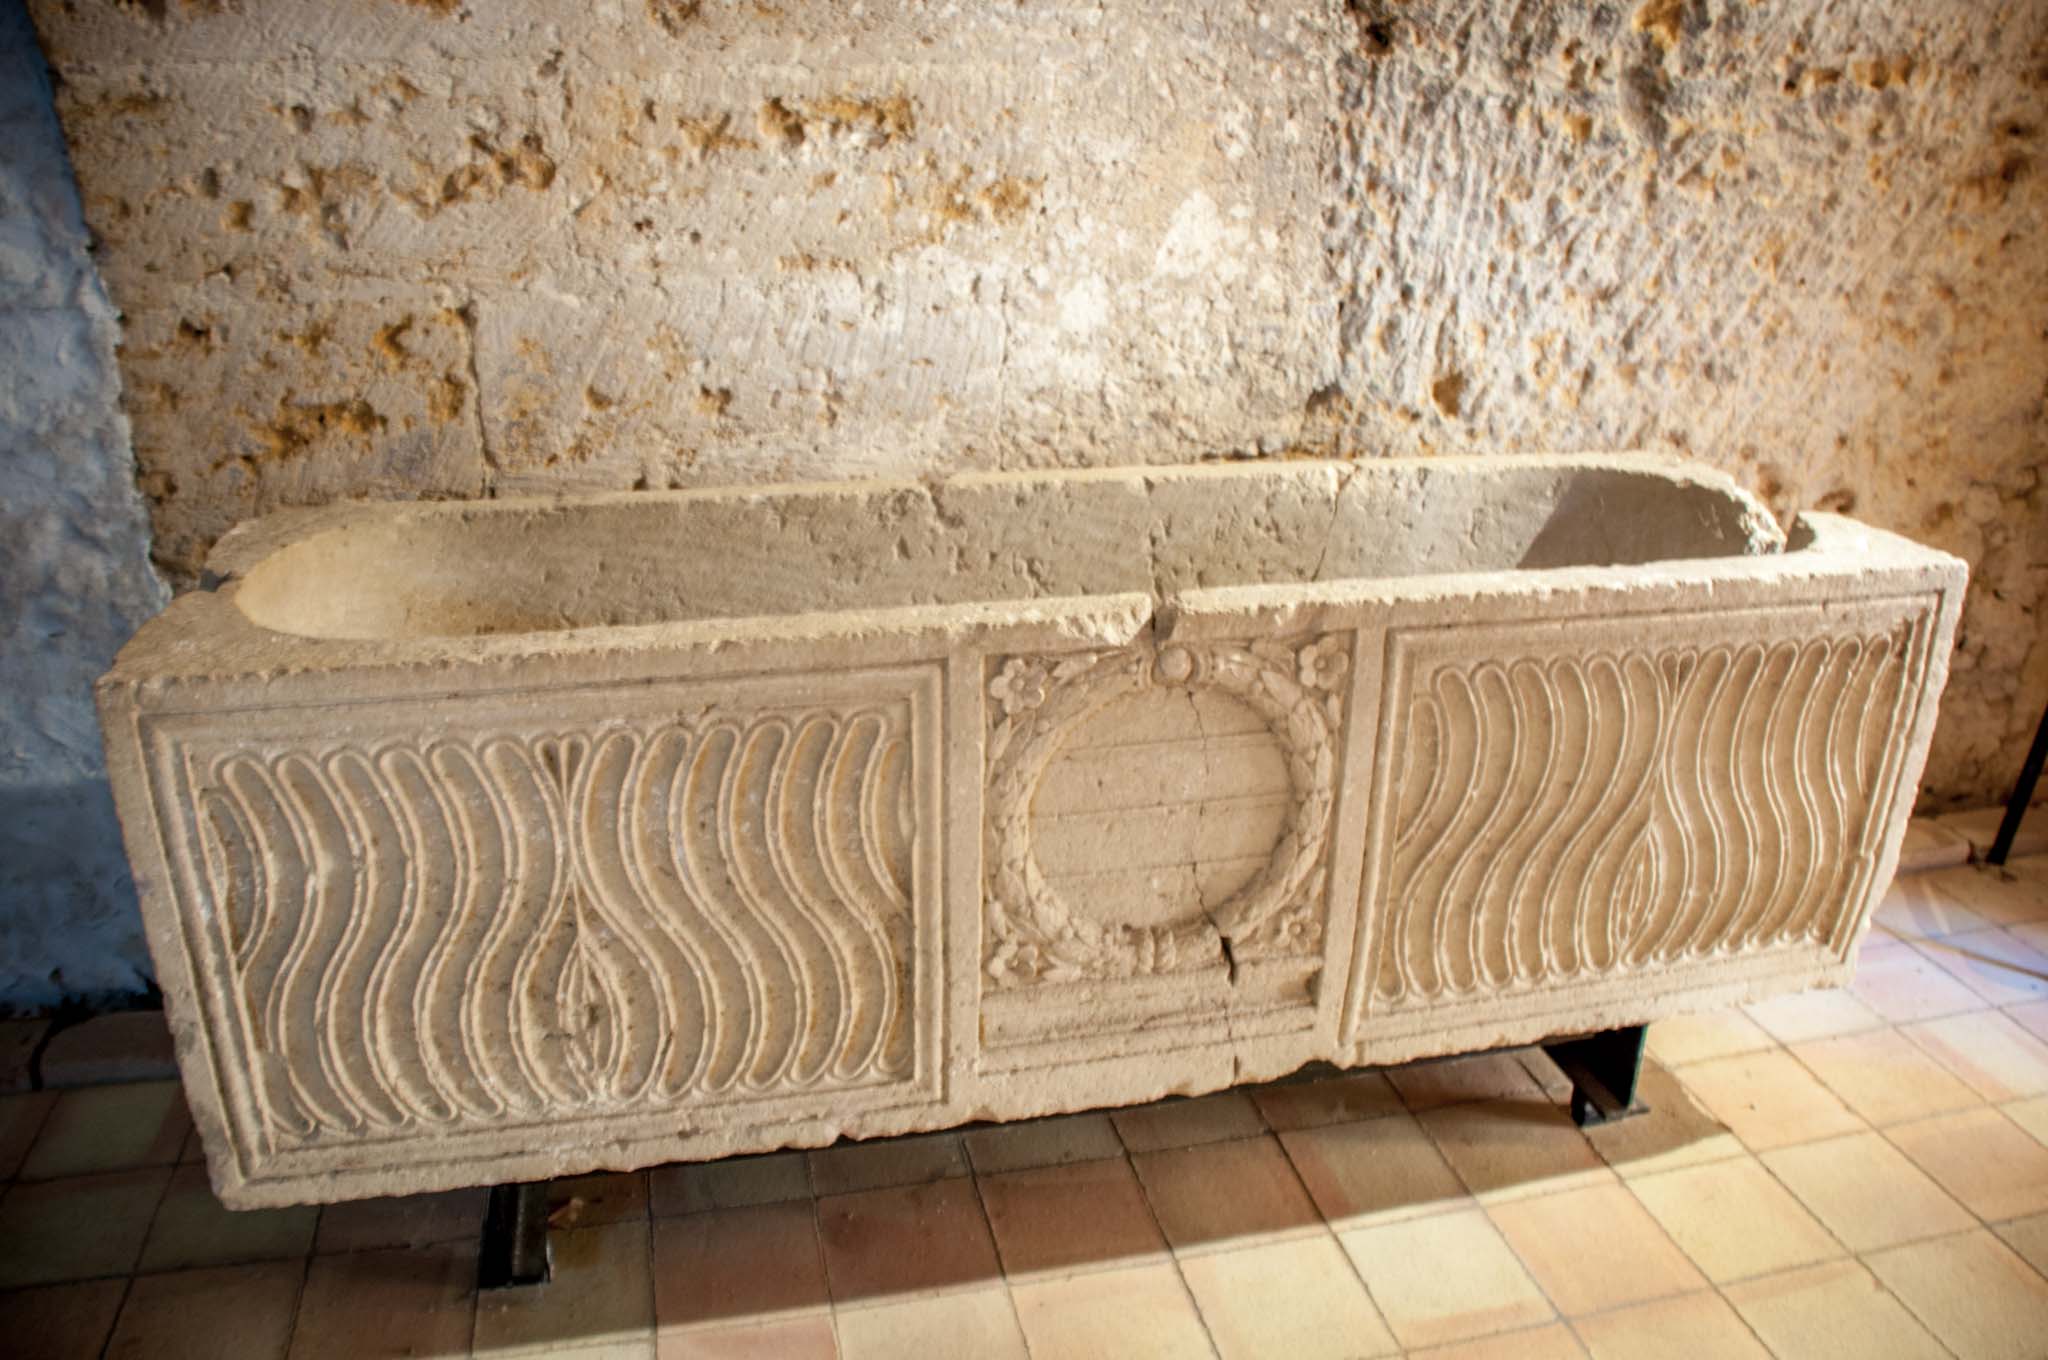 Ancient sarcophagus on display